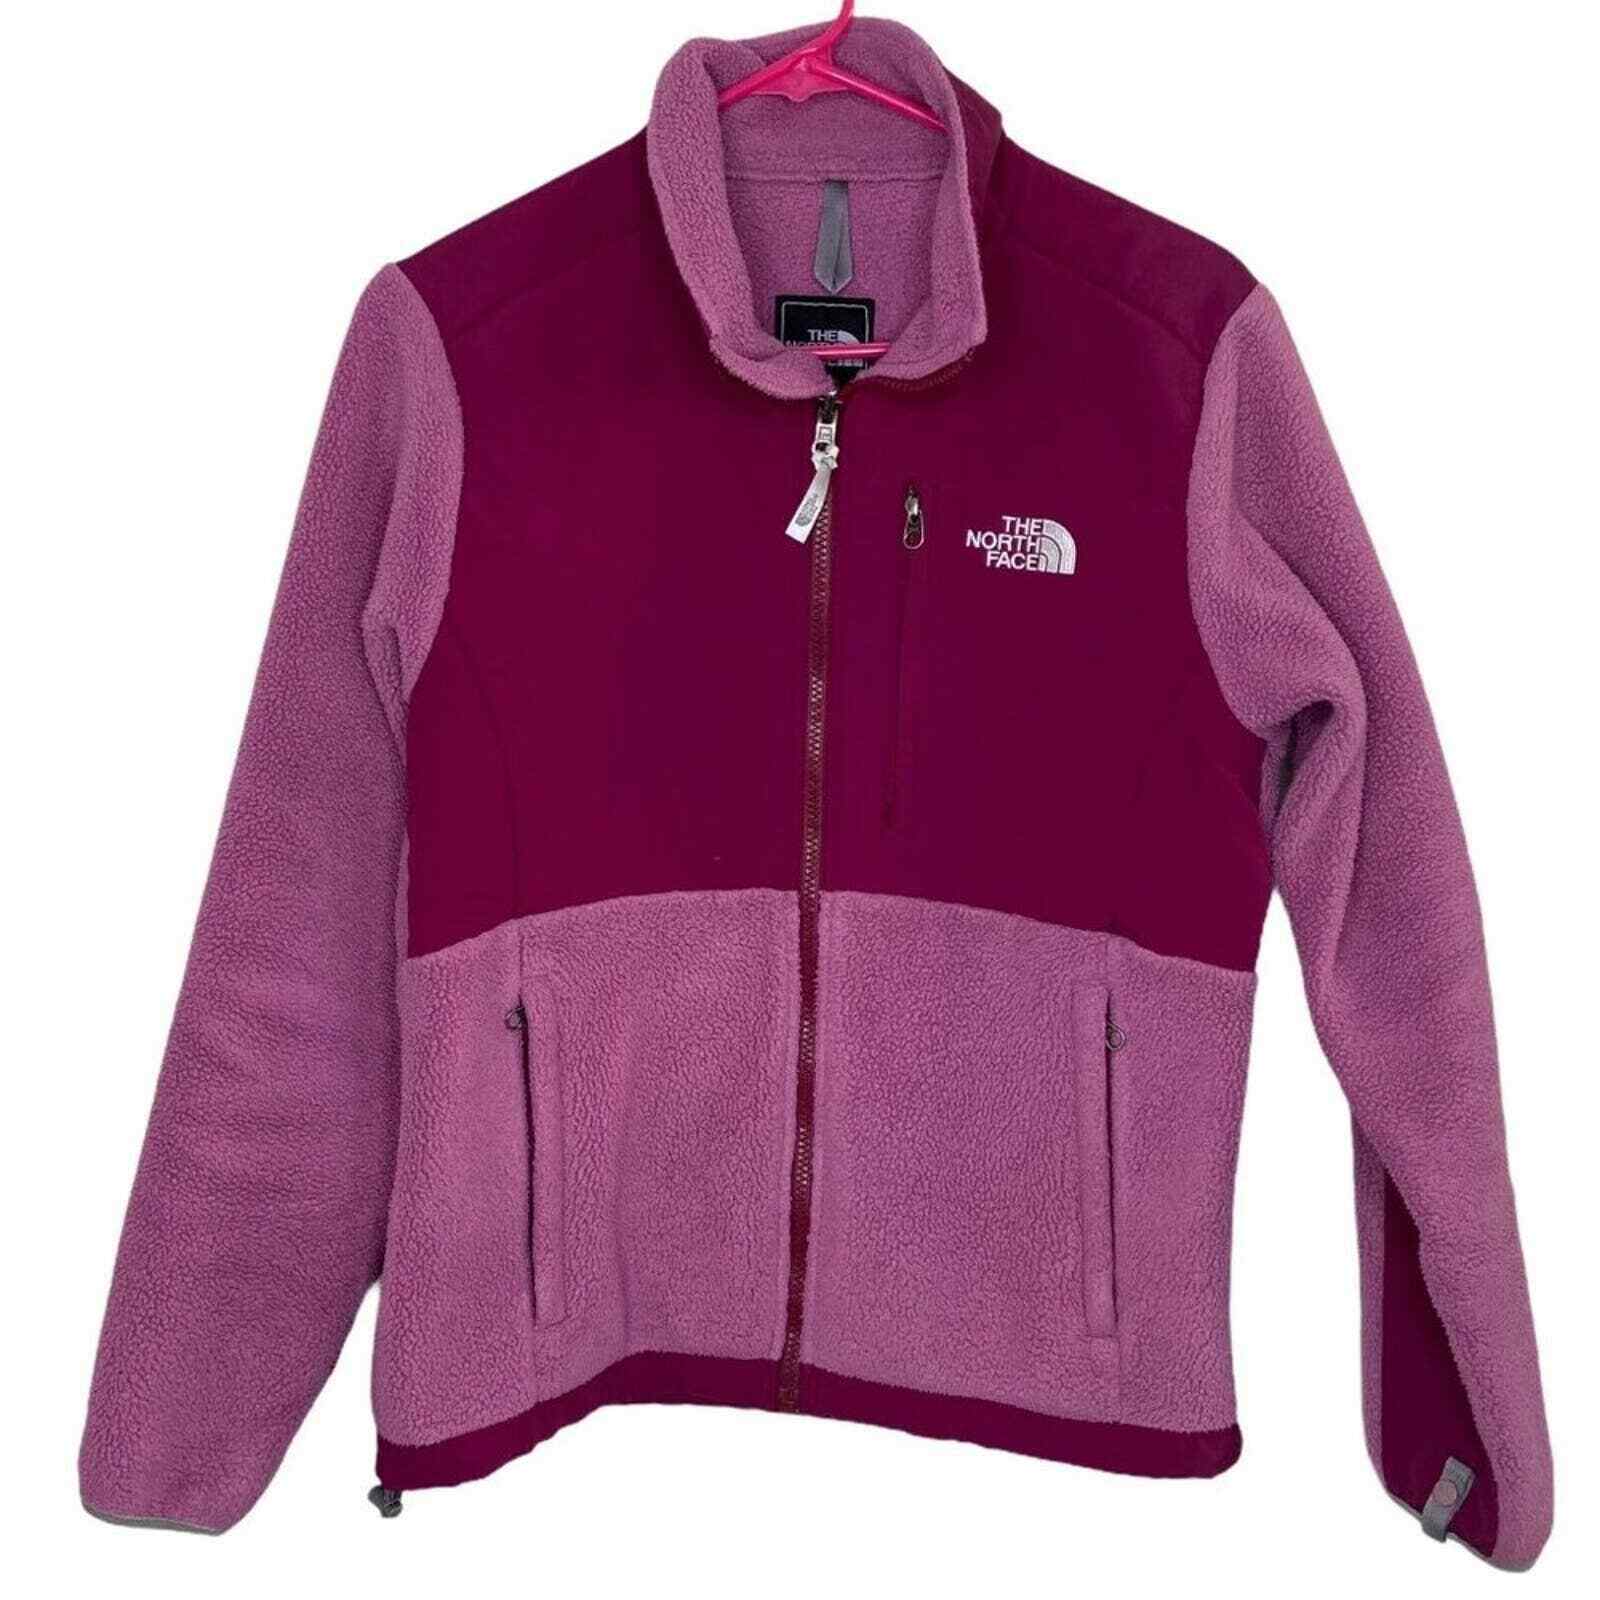 The North Face Purple Fleece Polartec Zip Jacket